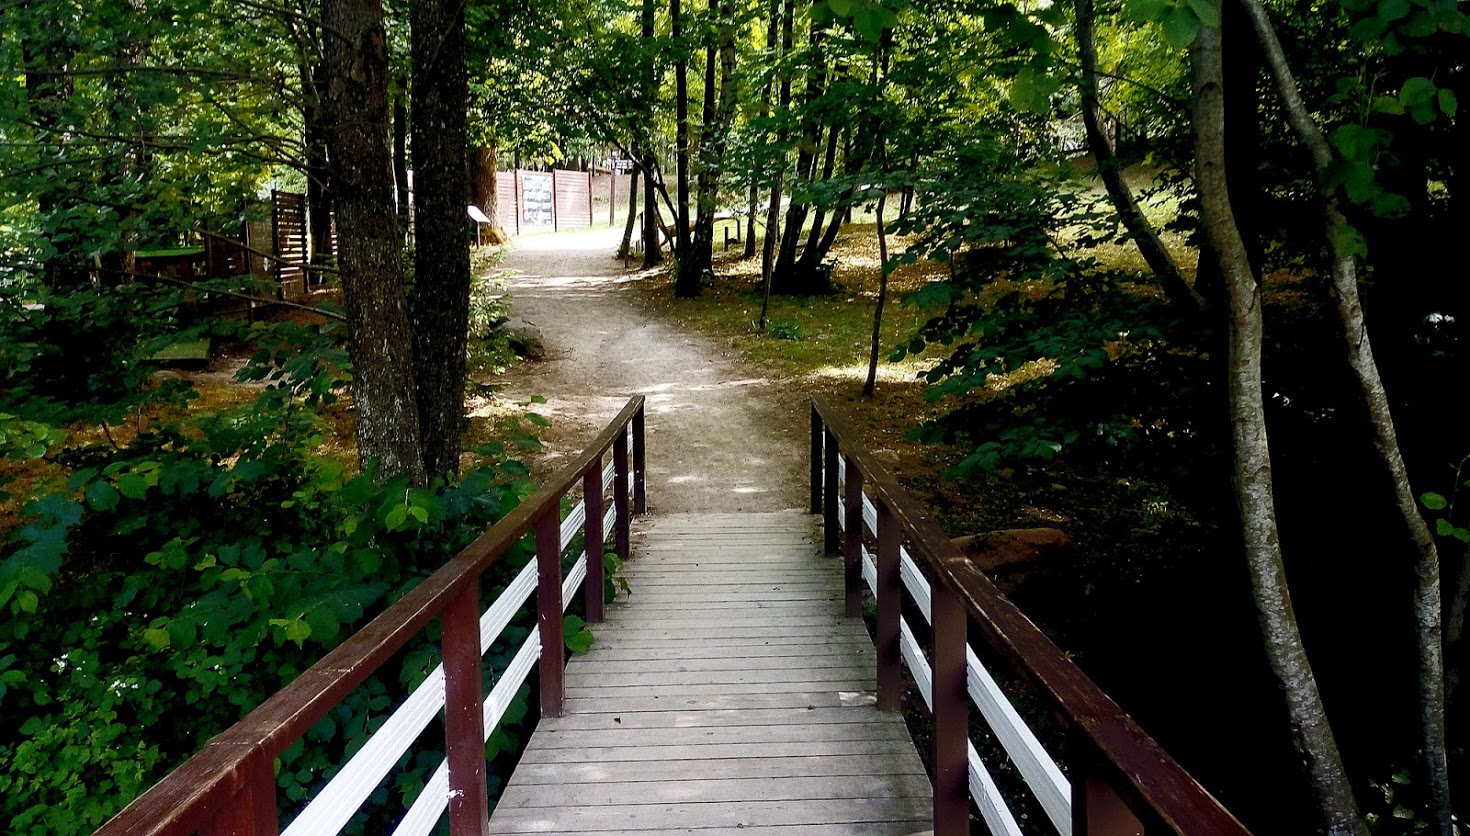 General 1470x836 forest wooden bridge path